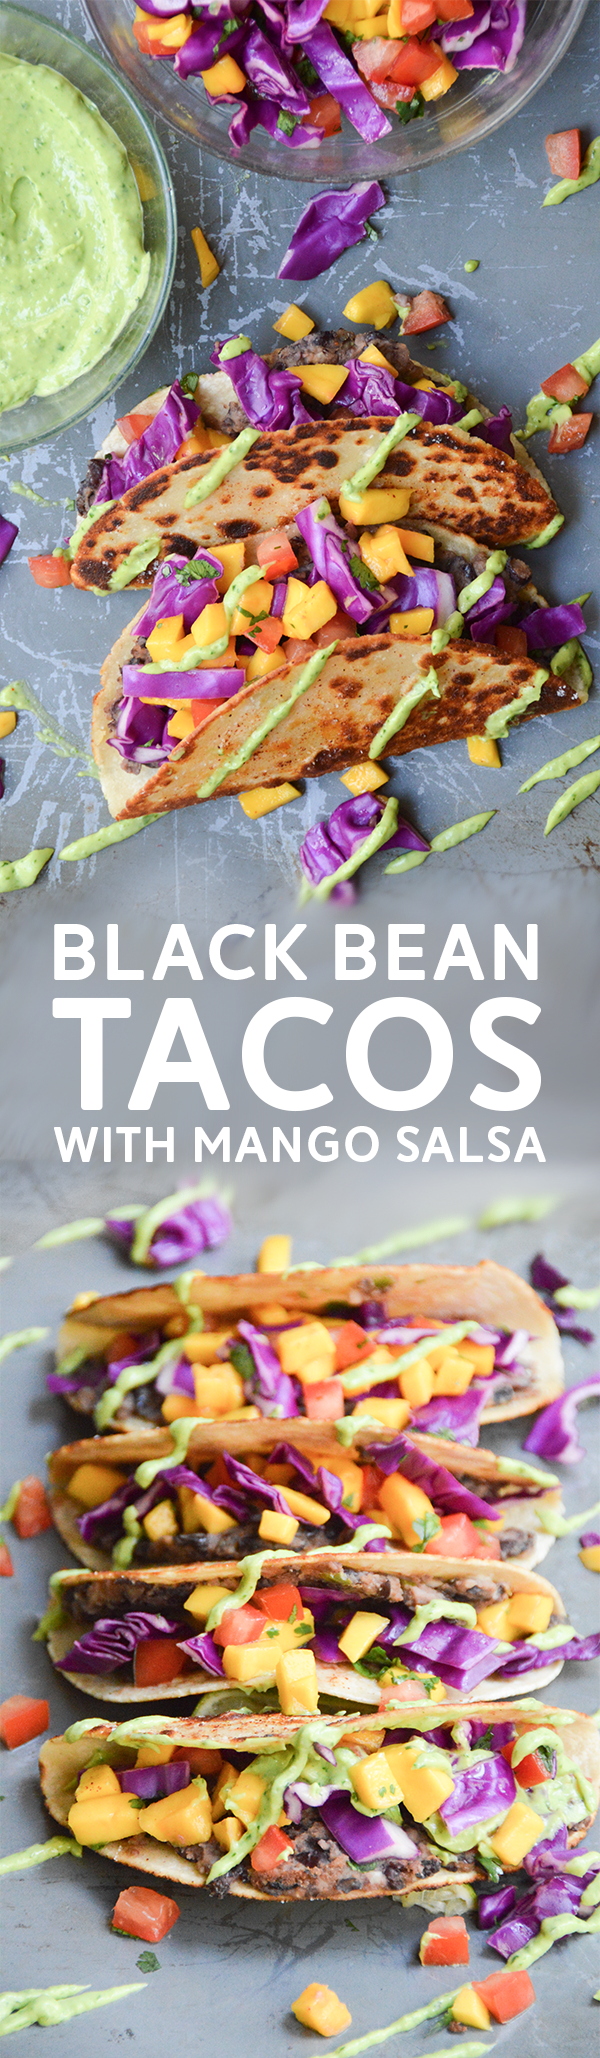 Black Bean Tacos with Mango Salsa & Avocado Crema - These delicious (vegan) tacos will steal your heart! #vegan #plantbased #tacos